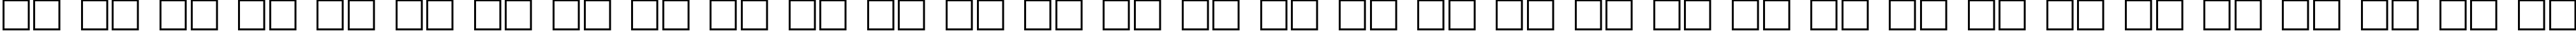 Пример написания русского алфавита шрифтом Bruskovaya Comp Plain110n